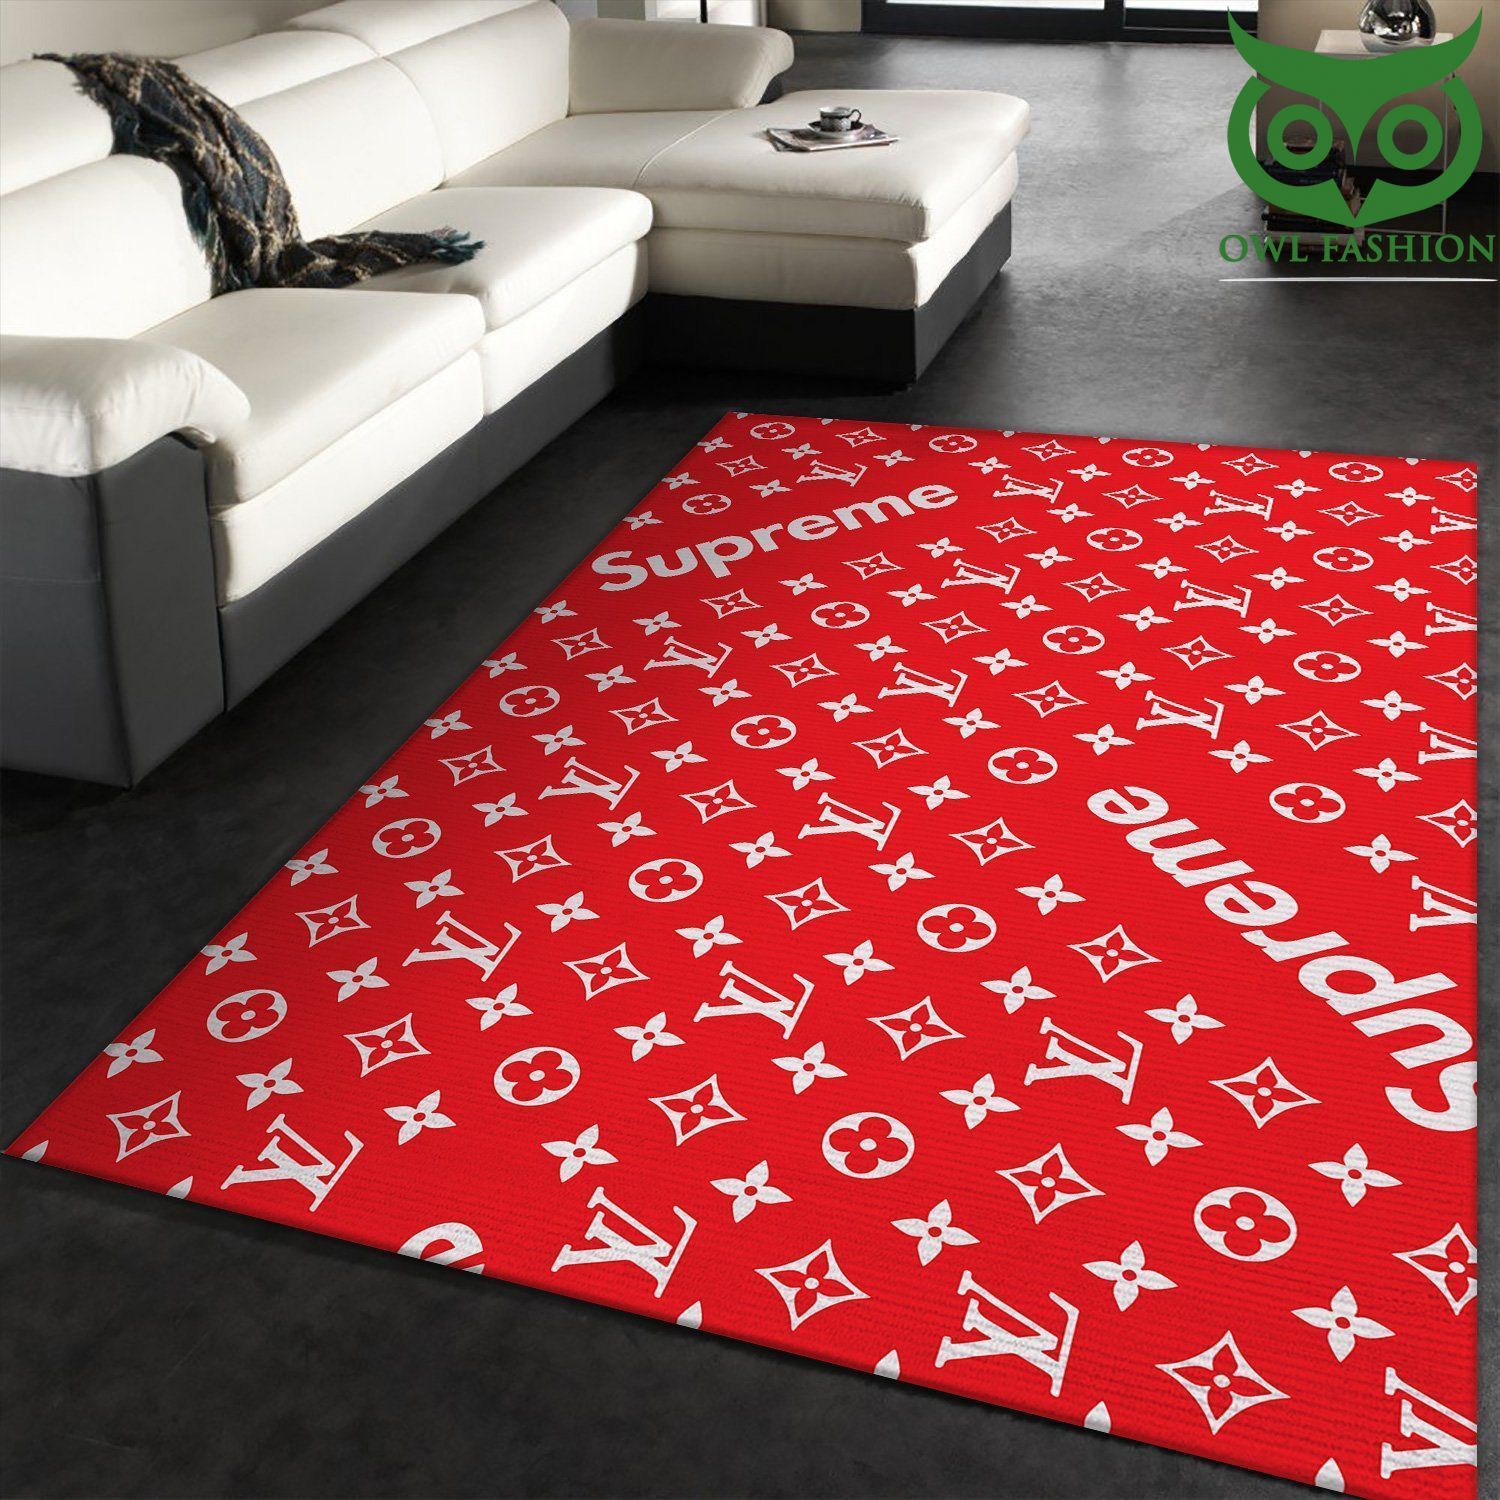 Lv And Supreme Carpet Rug Floor Decor - HomeFavo